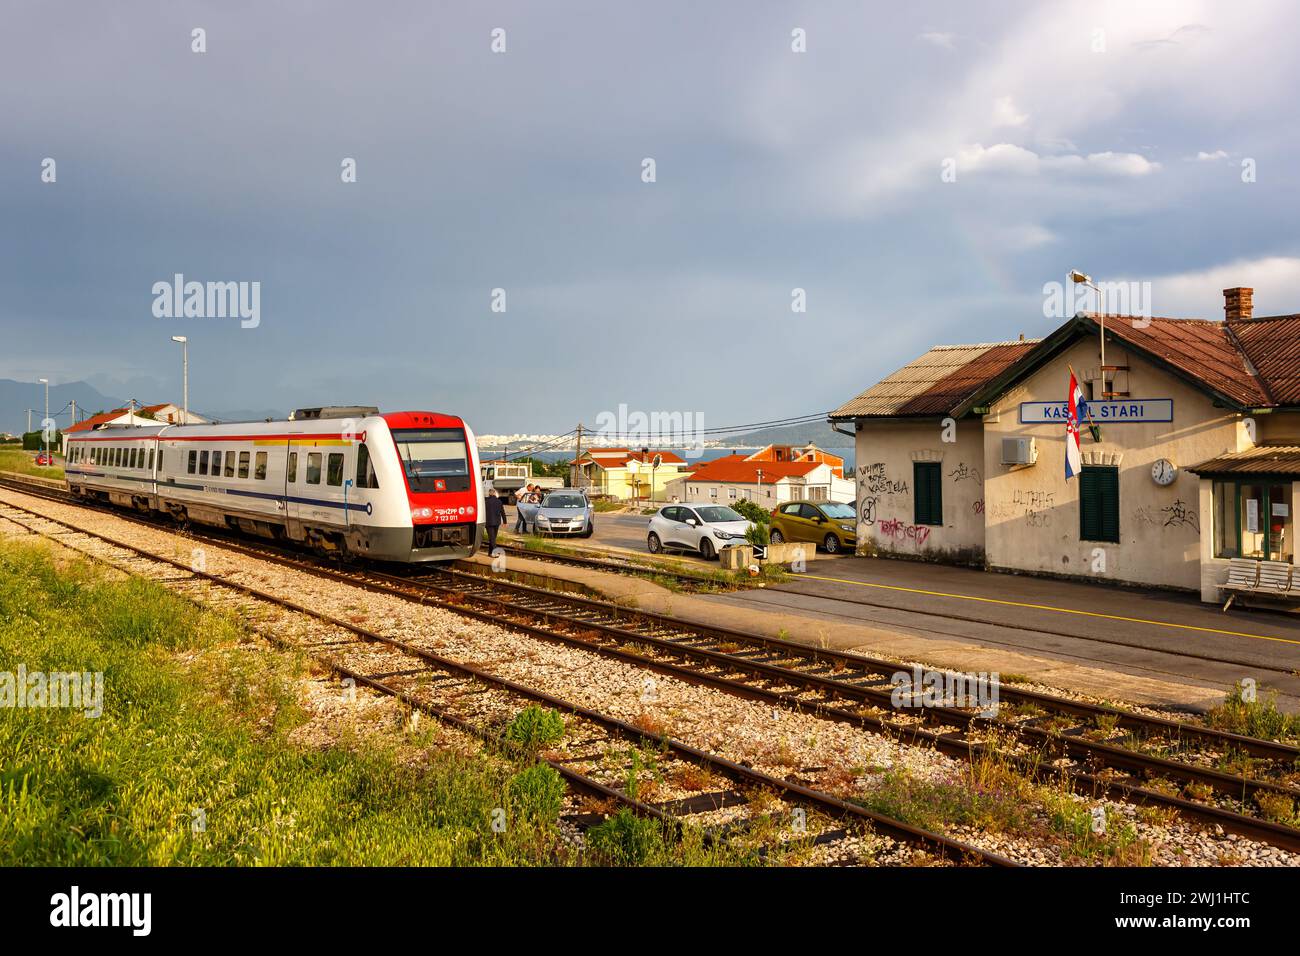 Local train with tilting technology of the Croatian railroad Hrvatske Zeljeznice at KaÅ¡tel Stari station, Croatia Stock Photo